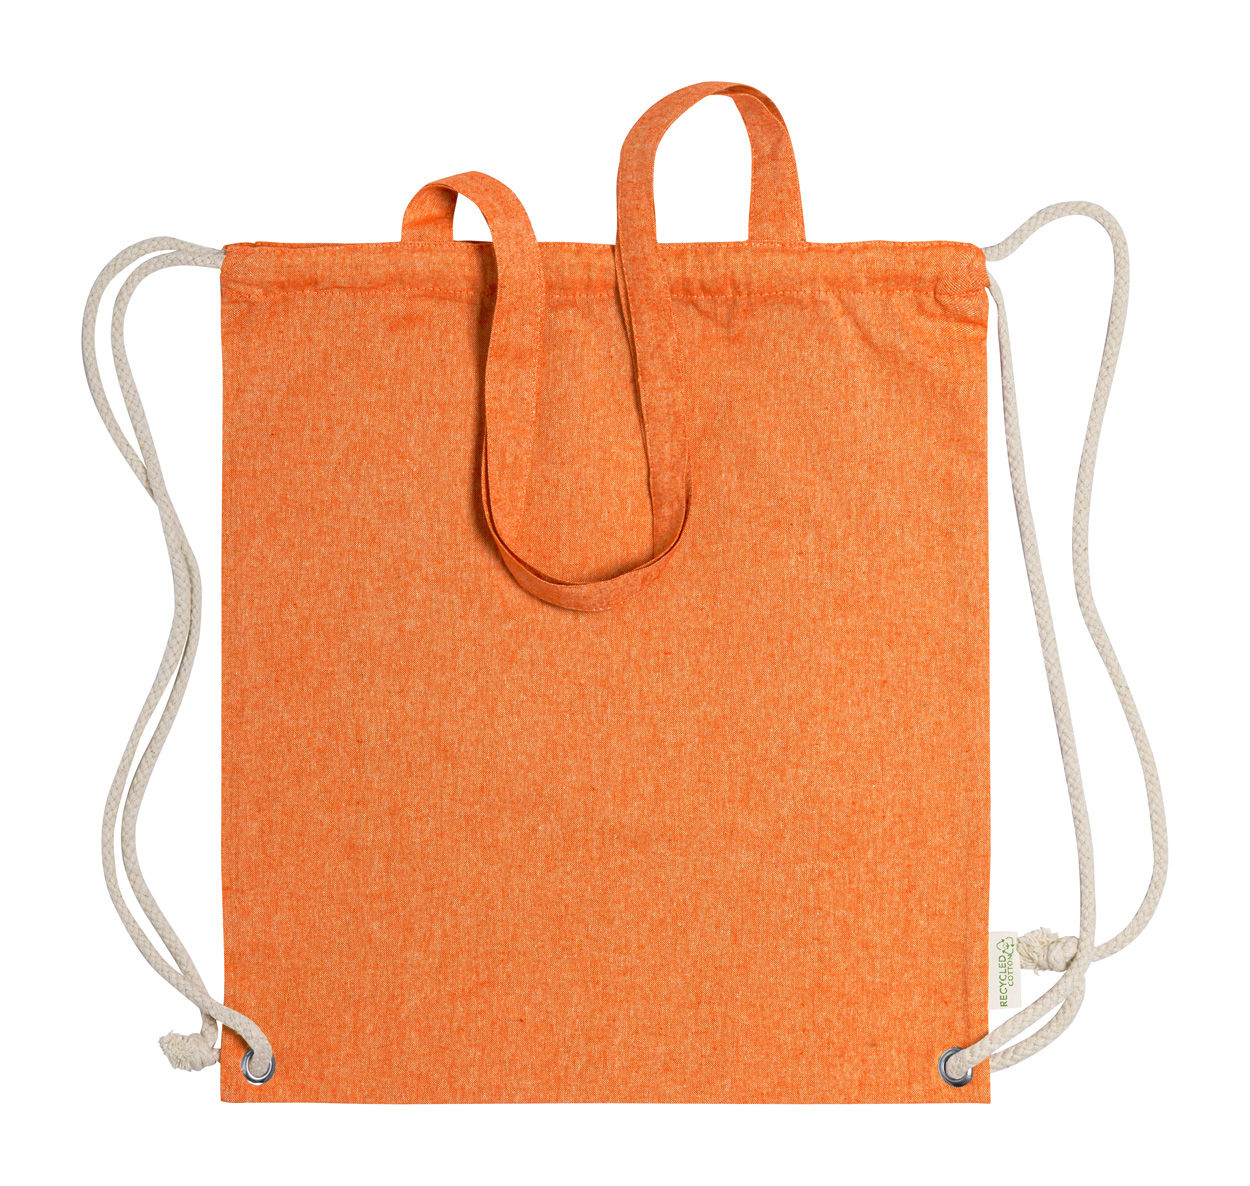 Fenin drawstring bag - orange